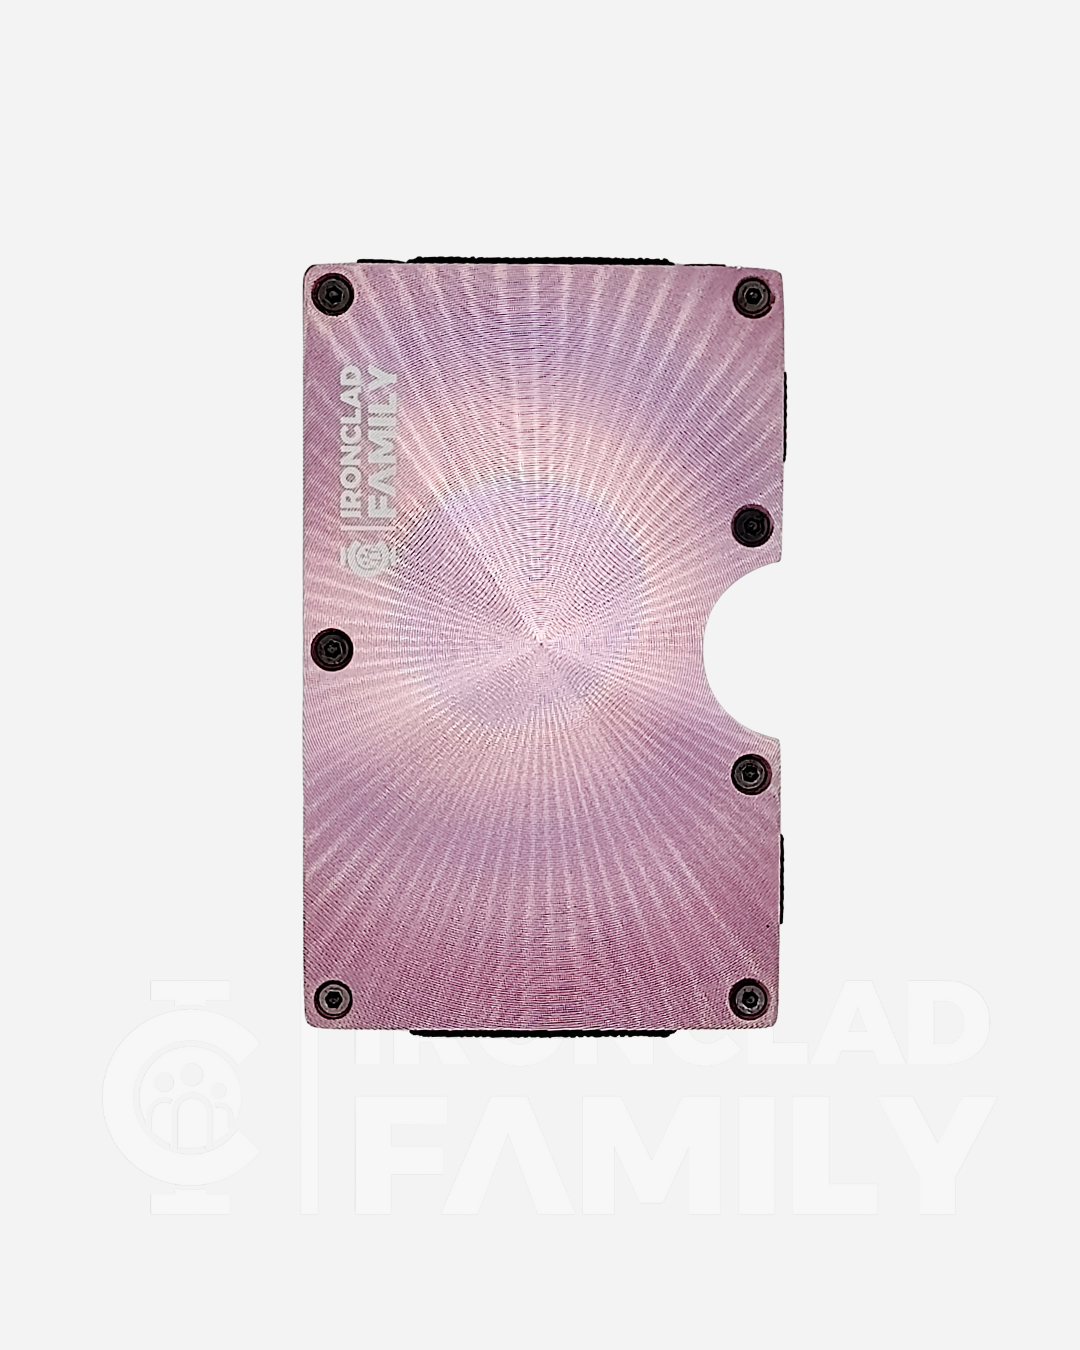 Pink textured metal RFID blocking wallet against a black background